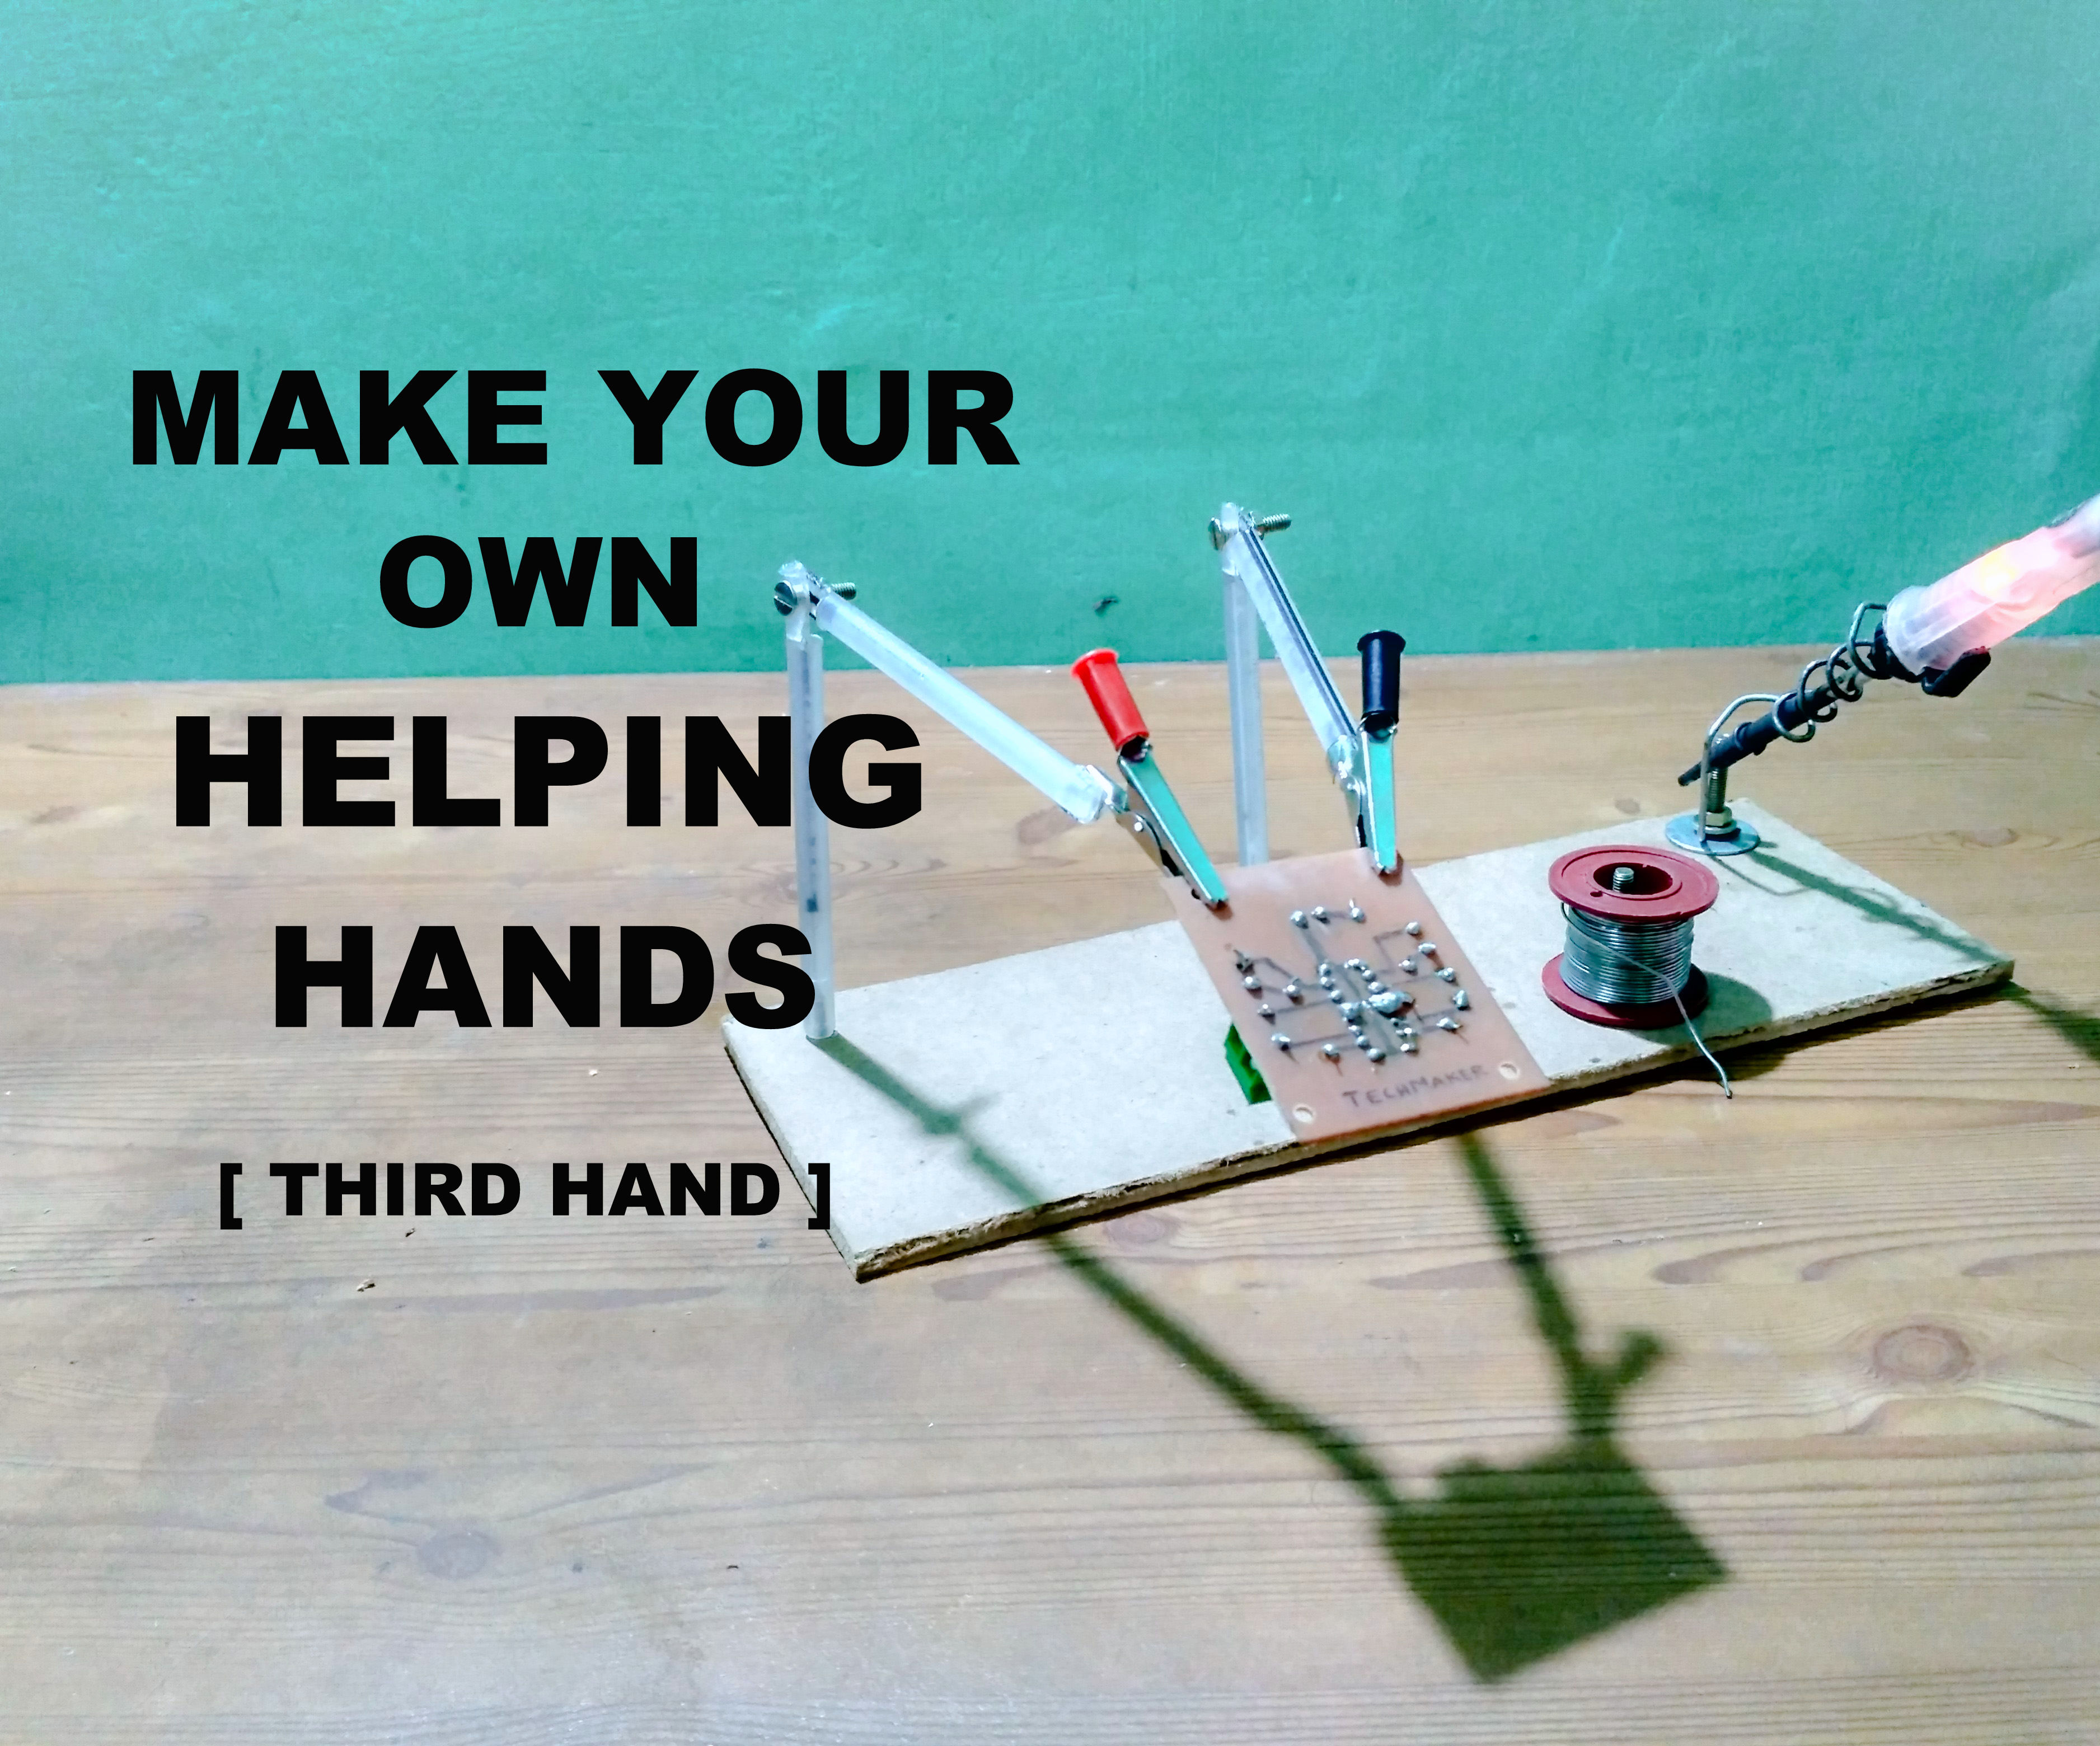 How to Make Third Hand Tool